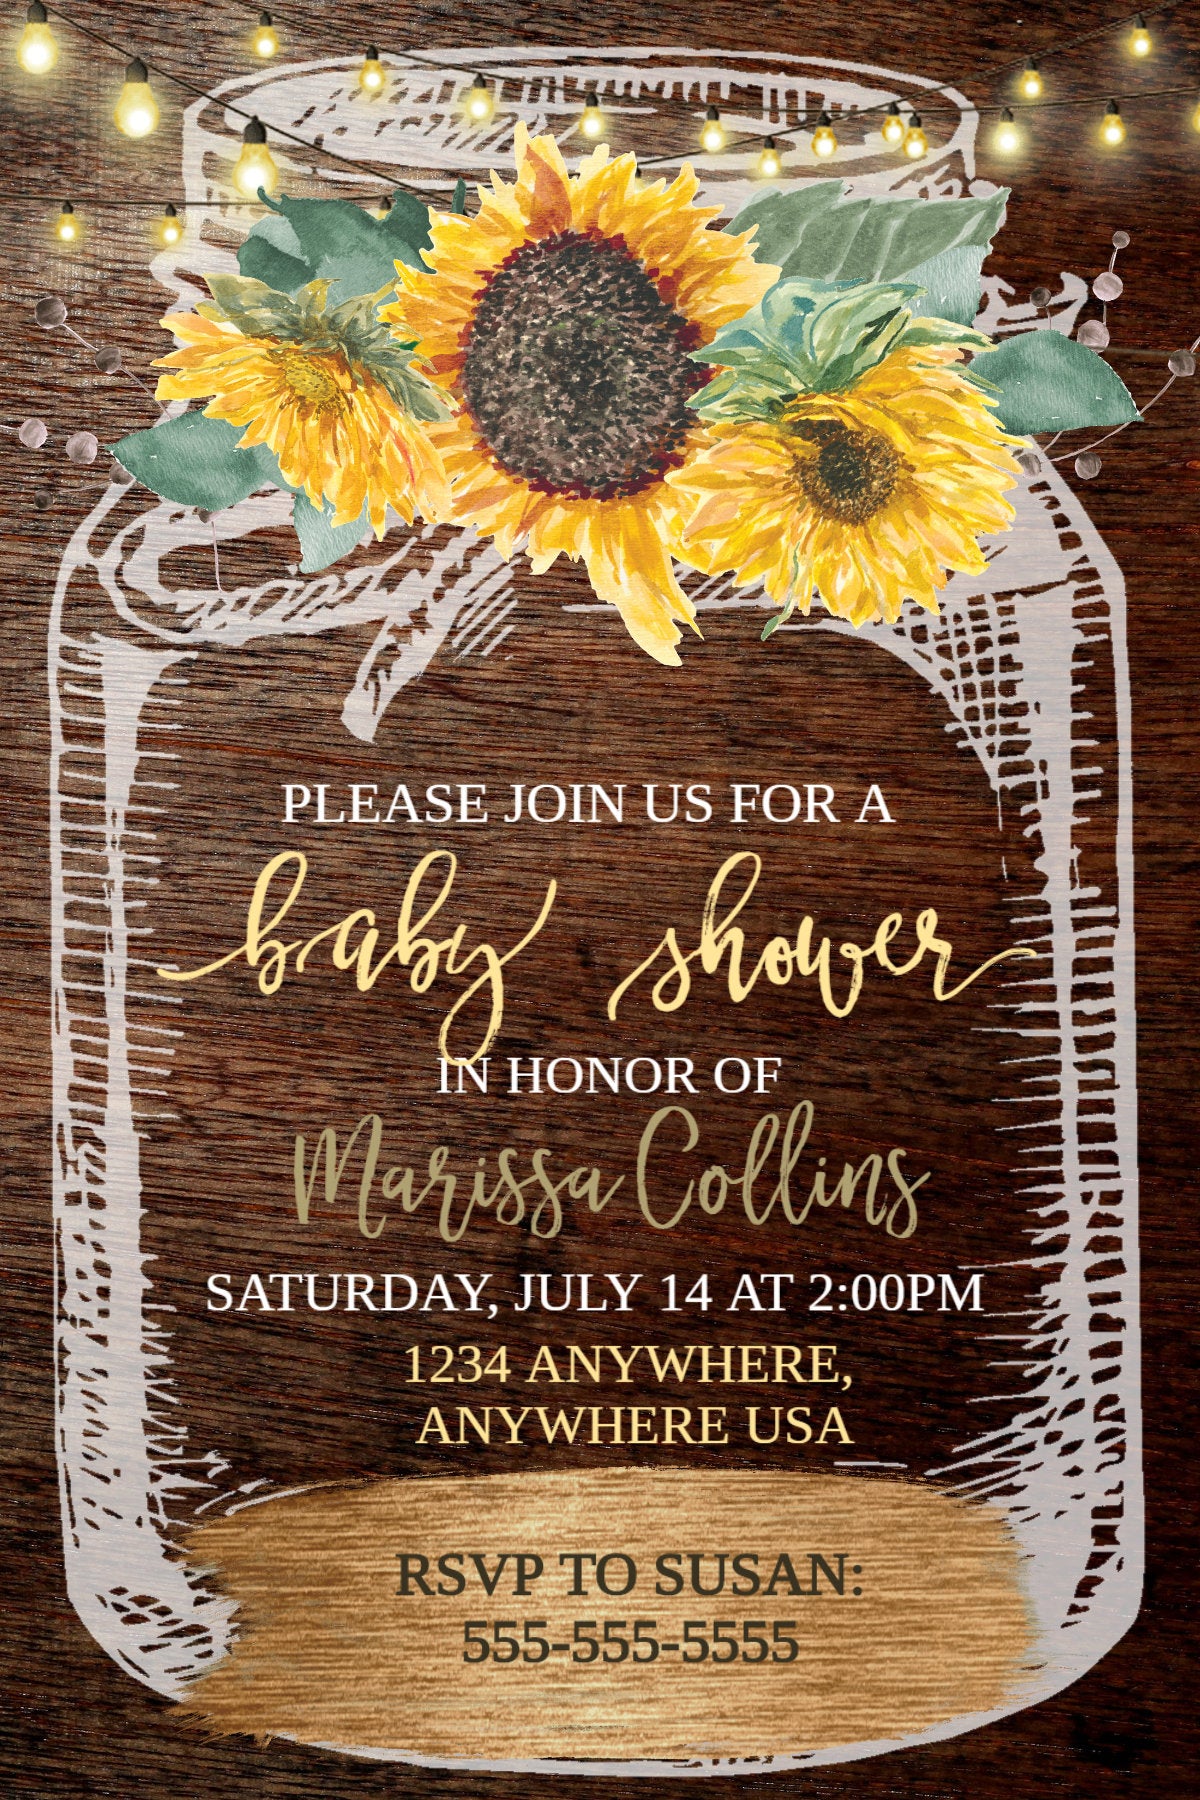 Sunflower Baby Shower Invitations